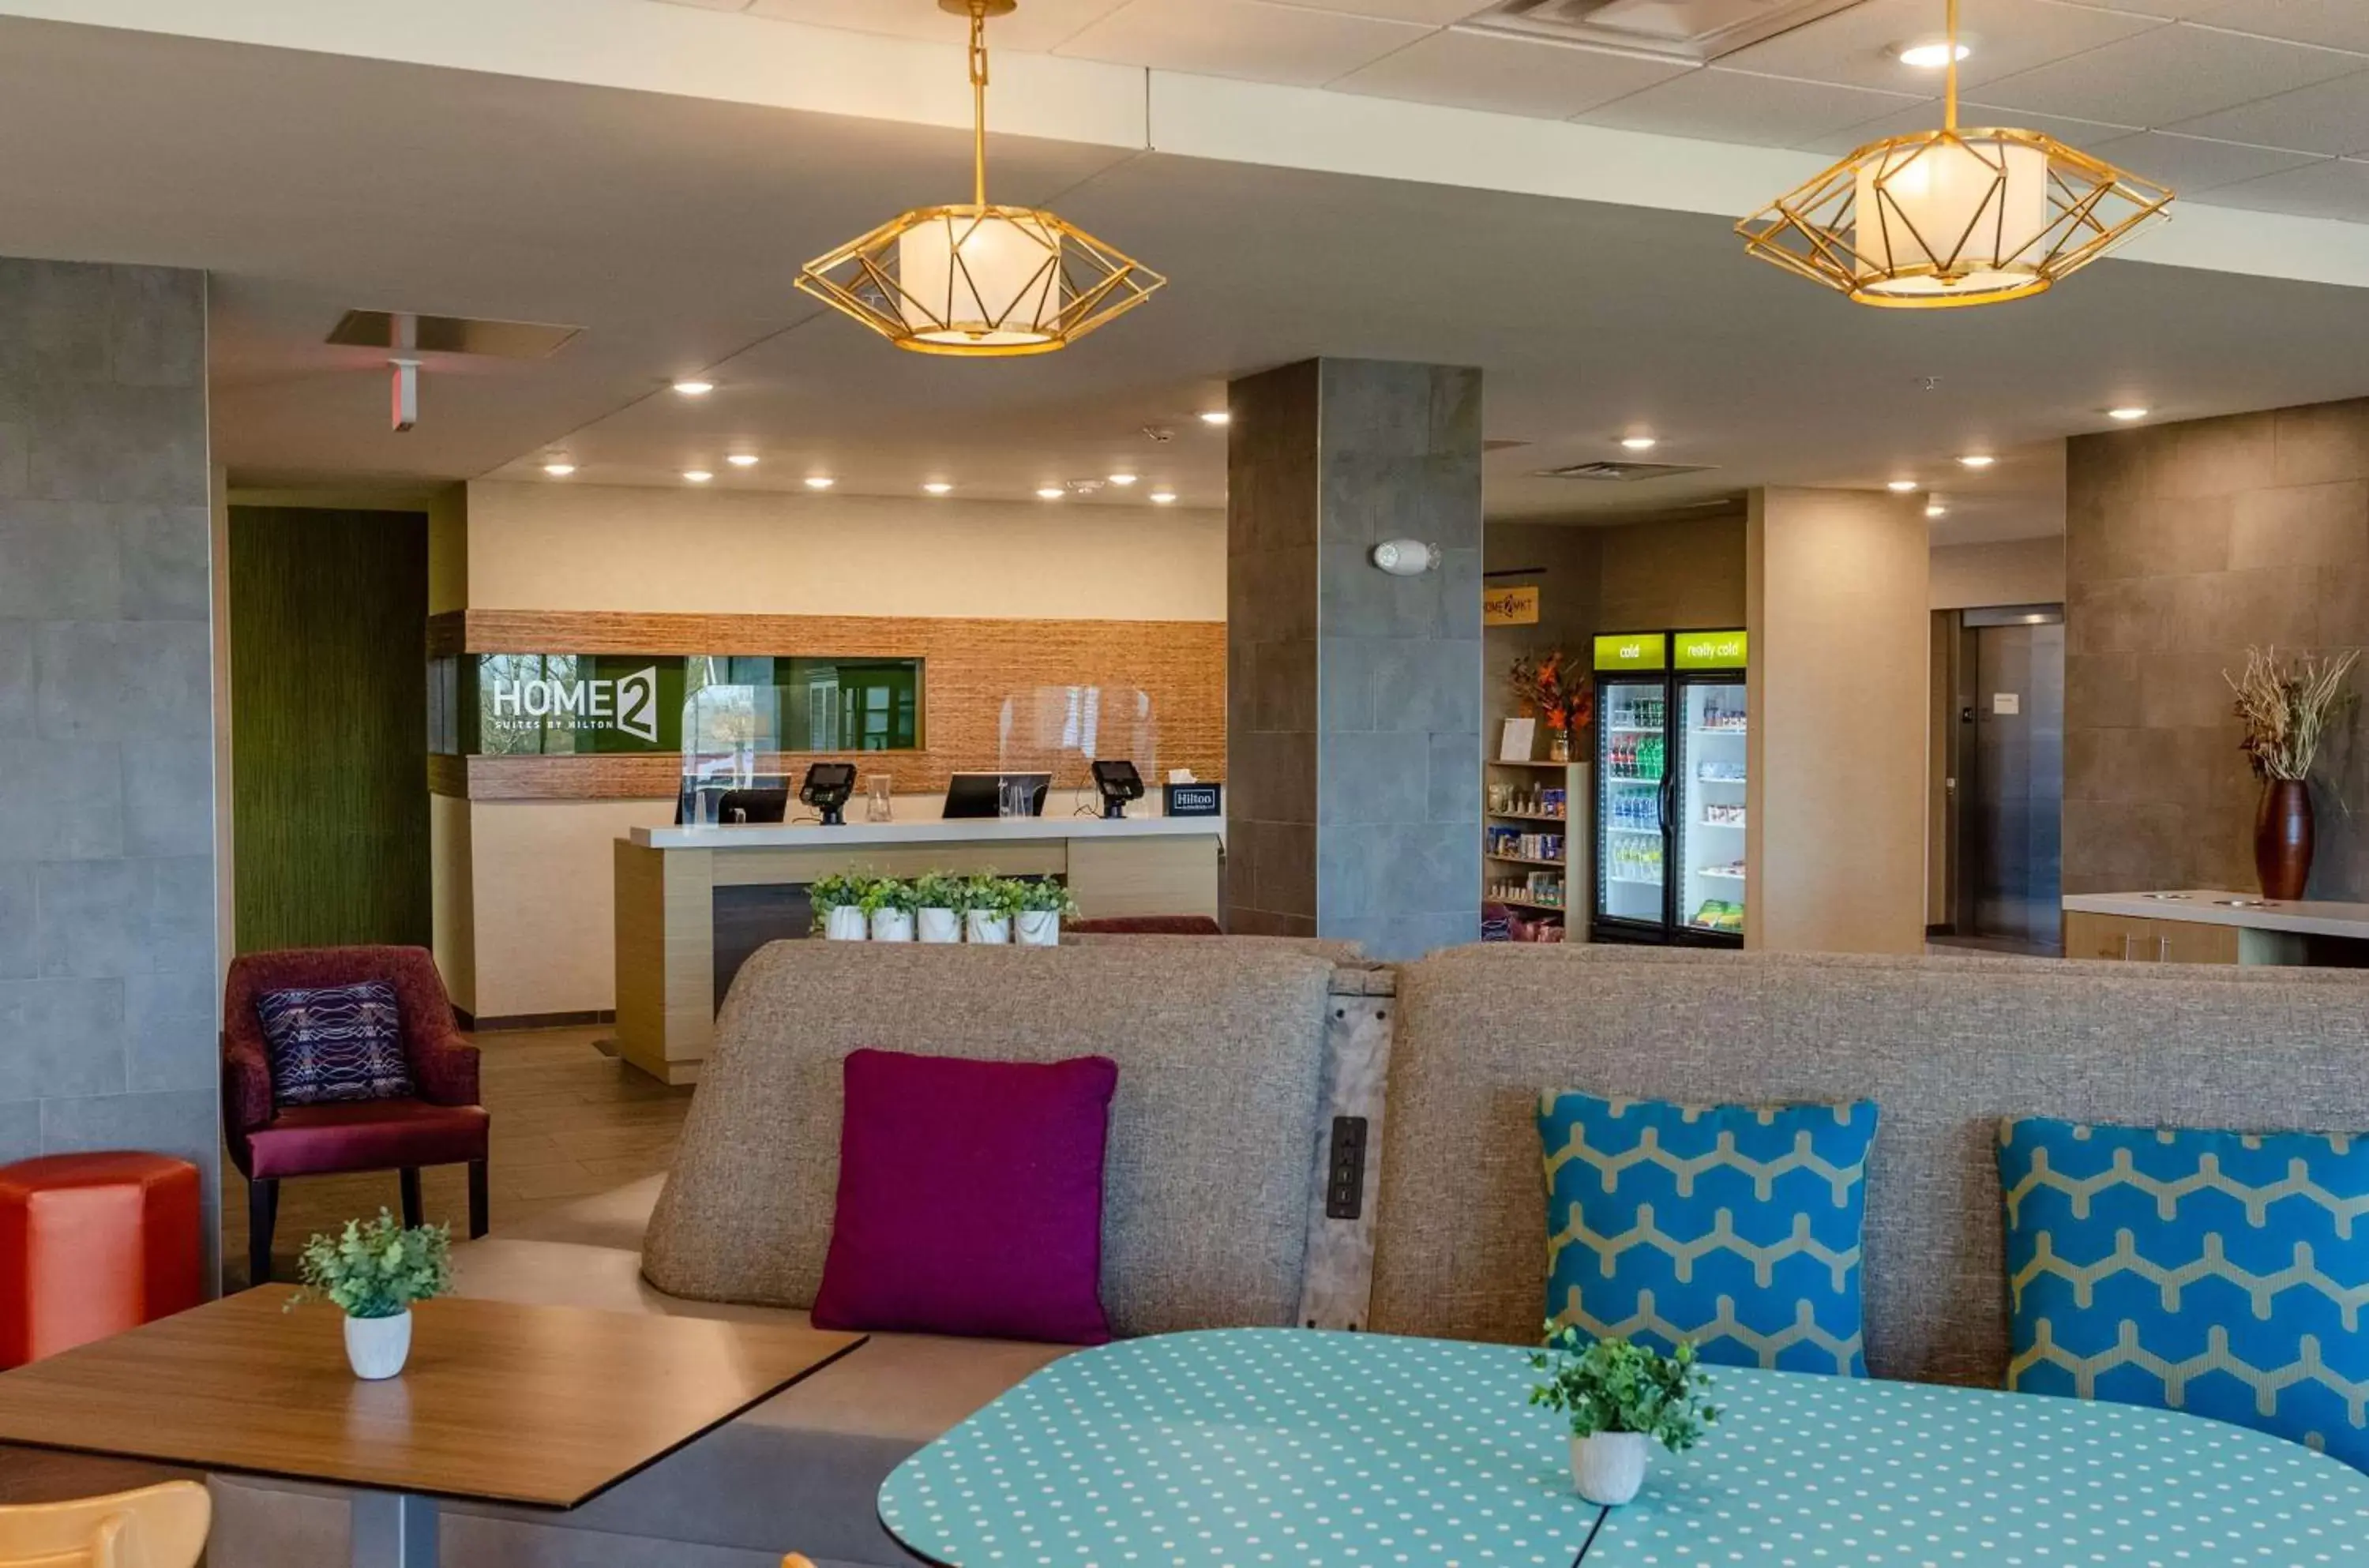 Lobby or reception in Home2 Suites By Hilton Atlanta Camp Creek Parkway, Ga